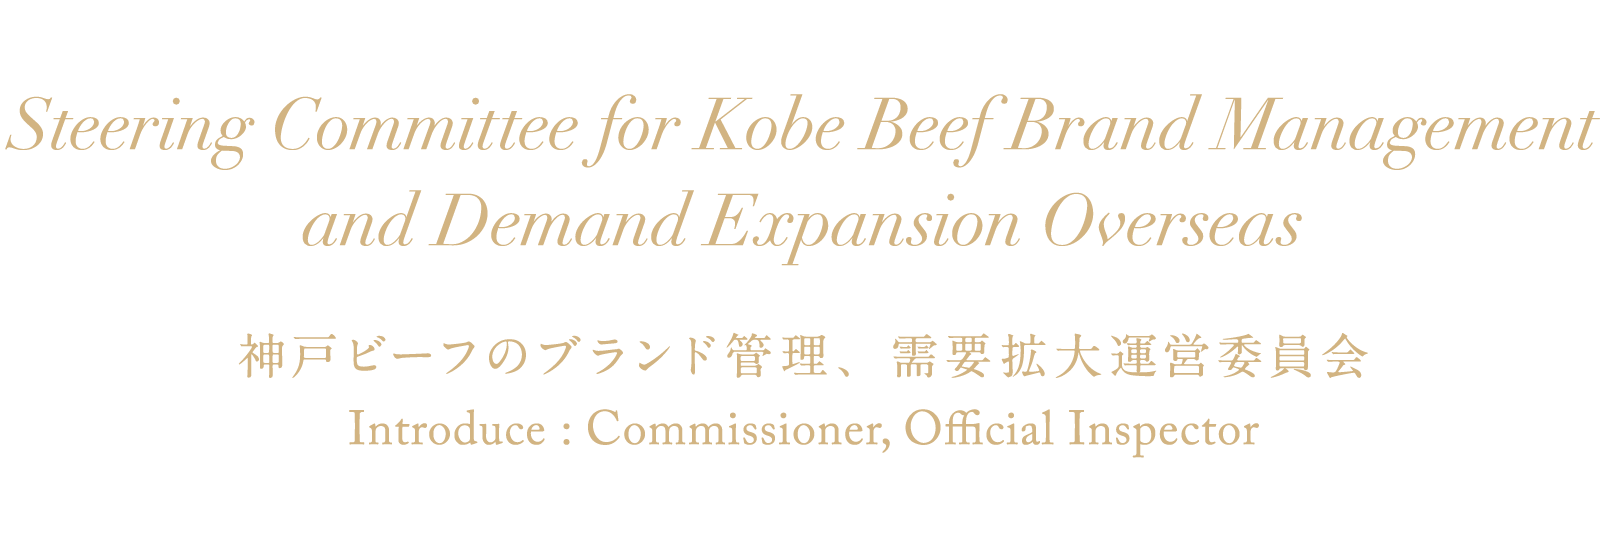 Commissioner,Official Inspector 神戸ビーフのブランド管理、需要拡大運営委員会